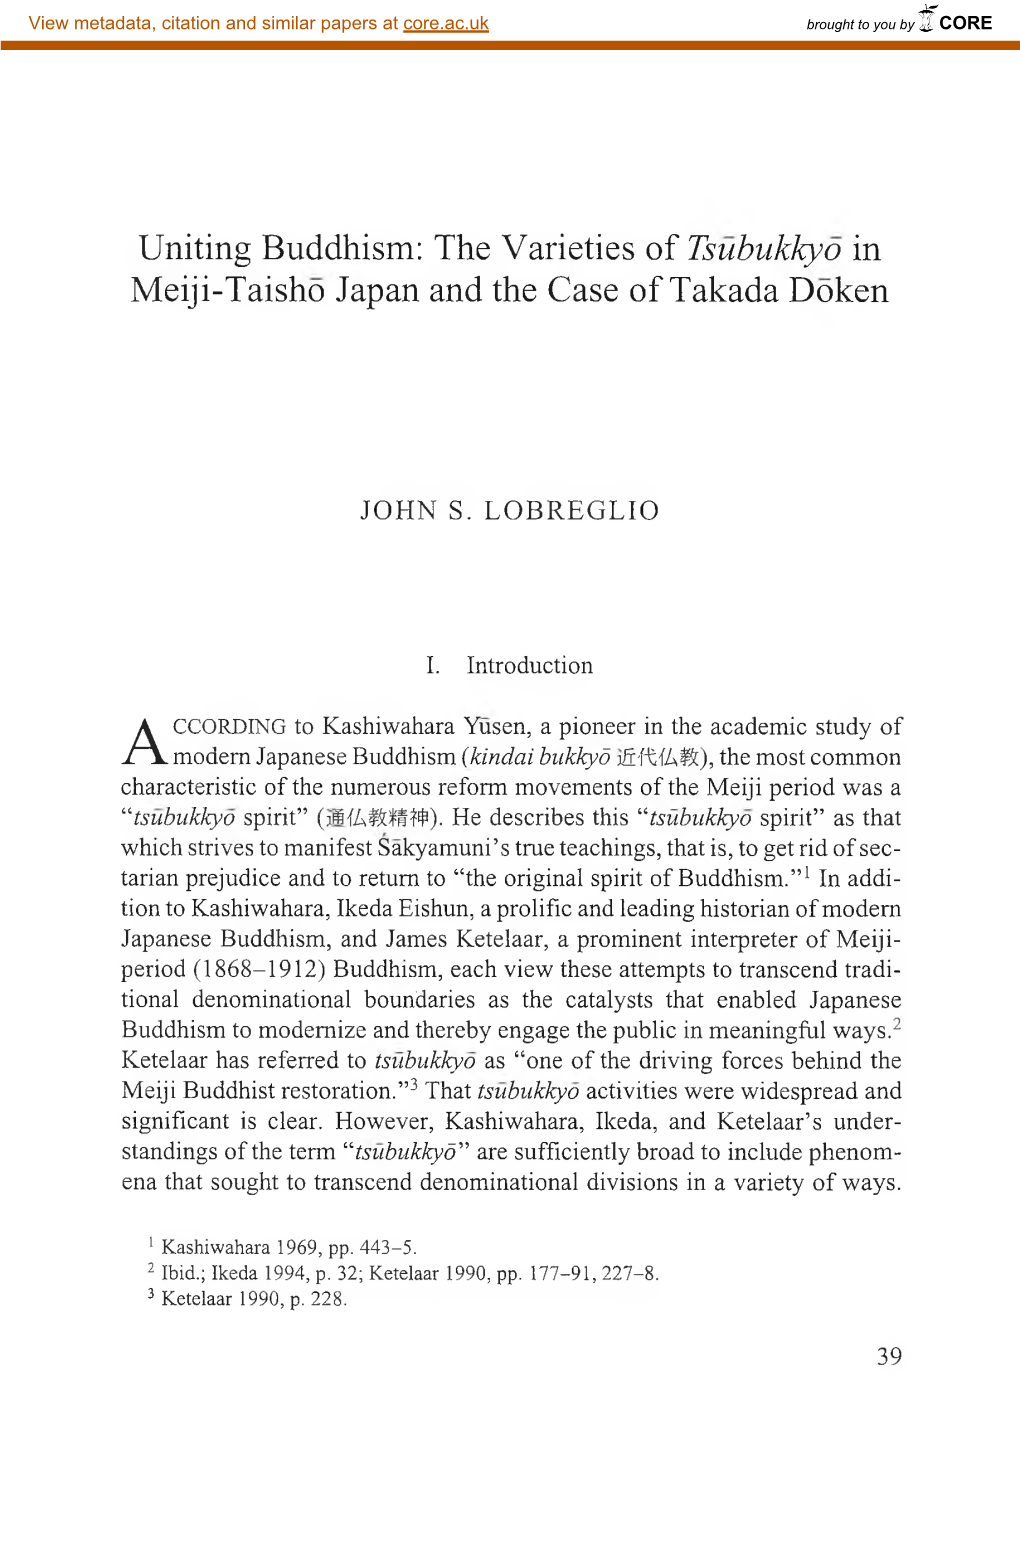 Varieties of Tsubukkyo in Meiji-Taisho Japan and the Case of Takada Doken